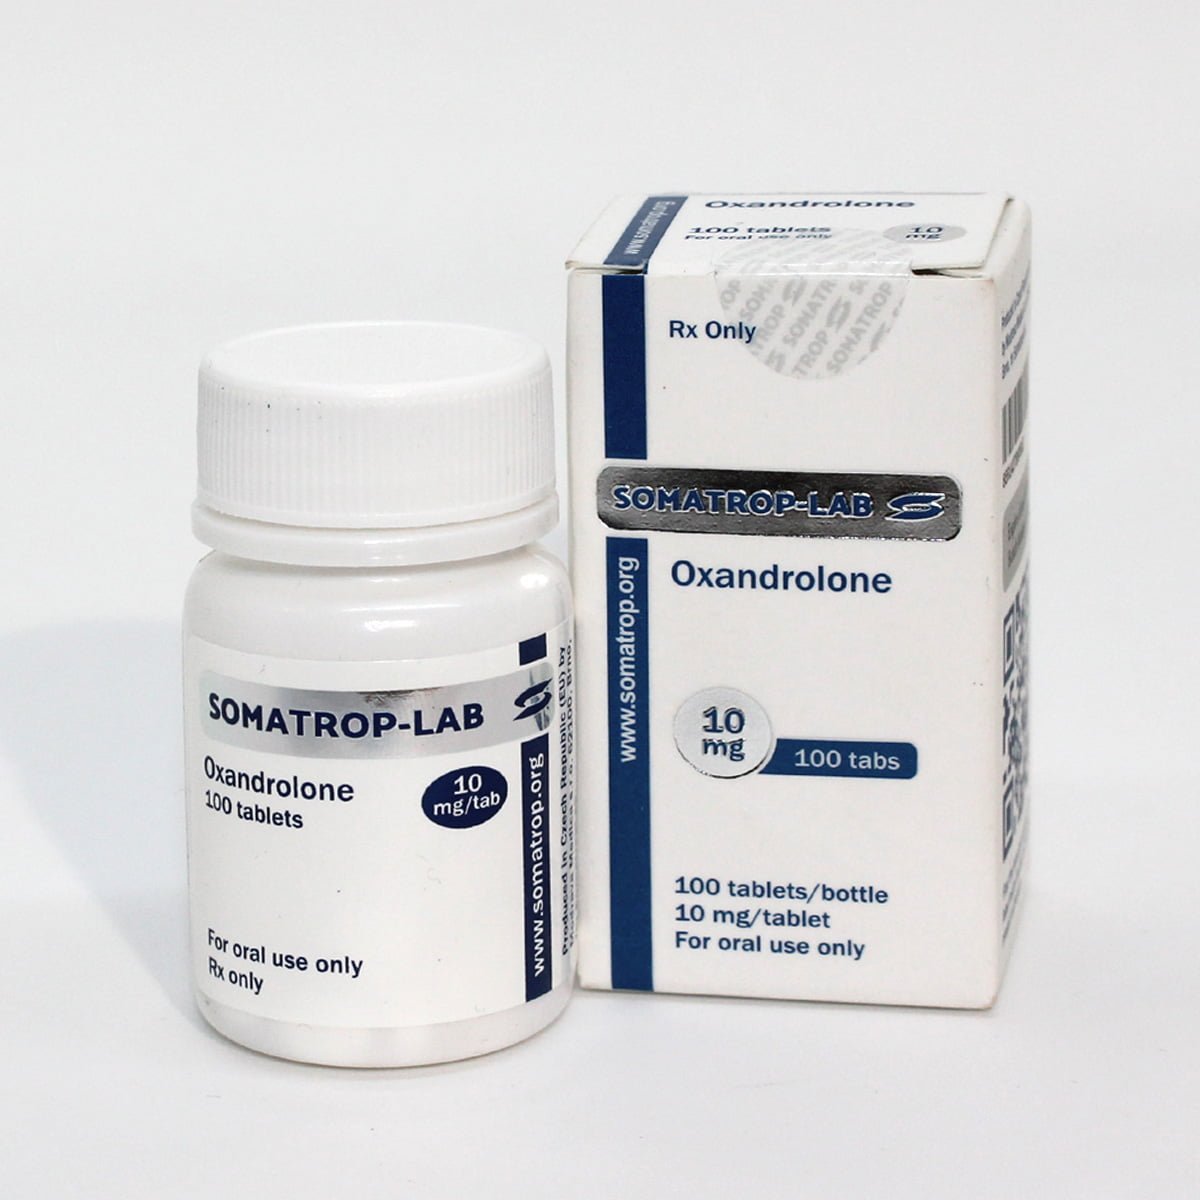 Somatrop-Lab Oxandrolone (Anavar)